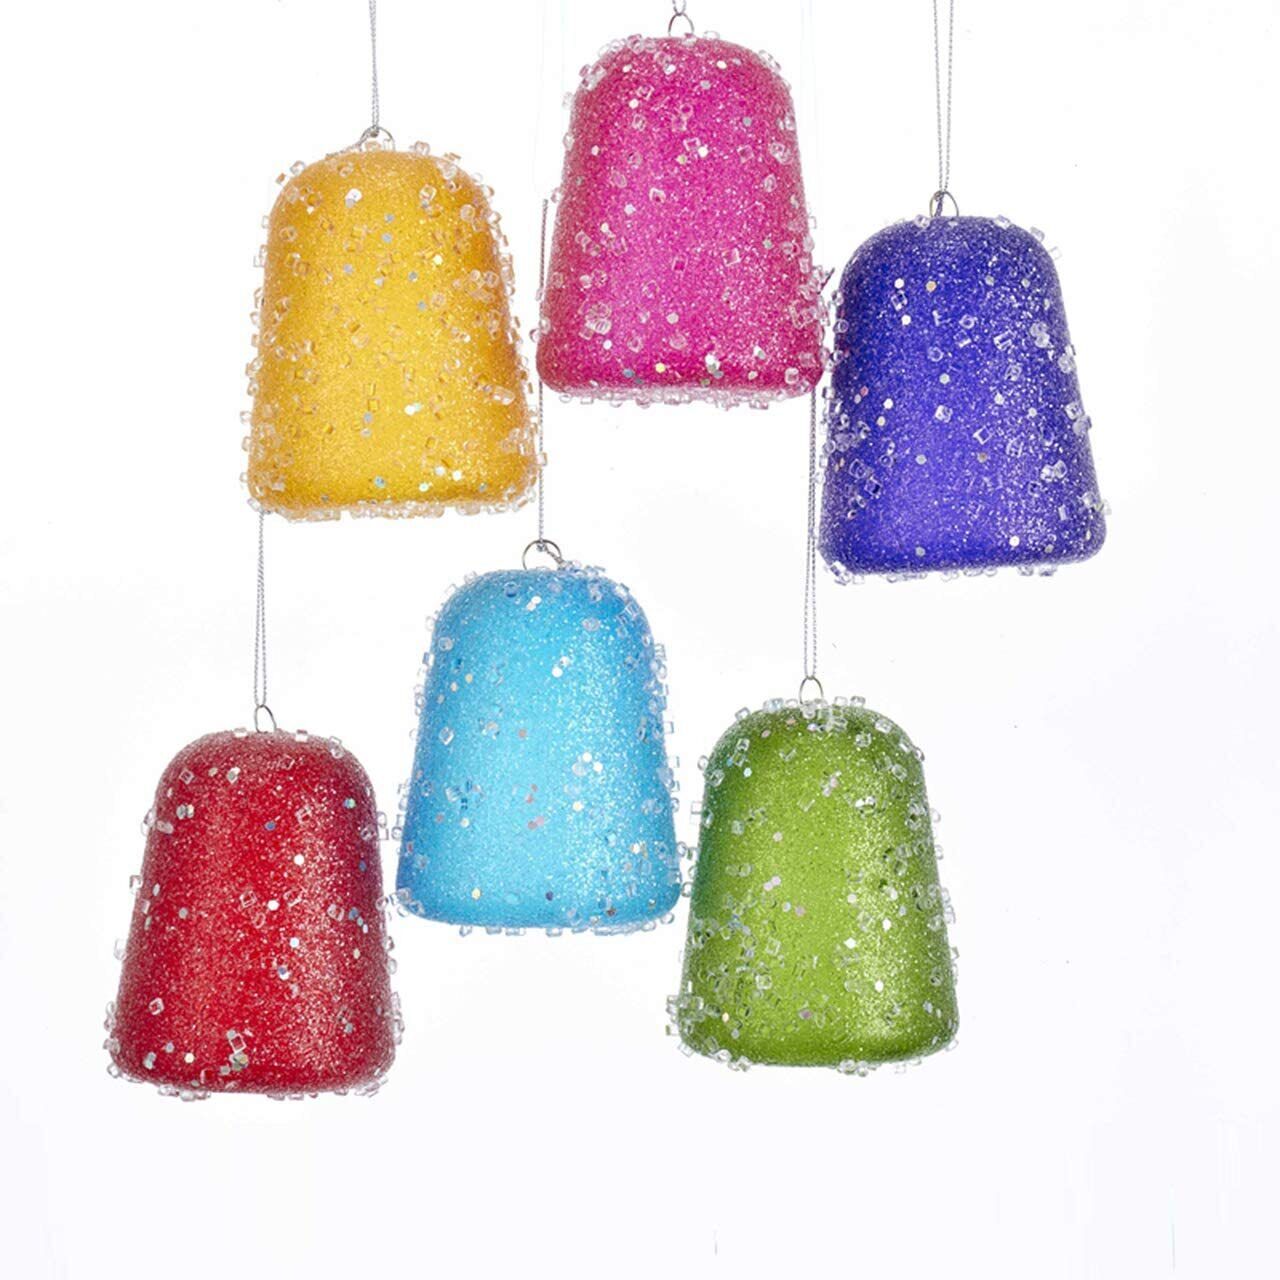 Kurt Adler Glittered Gum Drop Ornaments - Set of 6